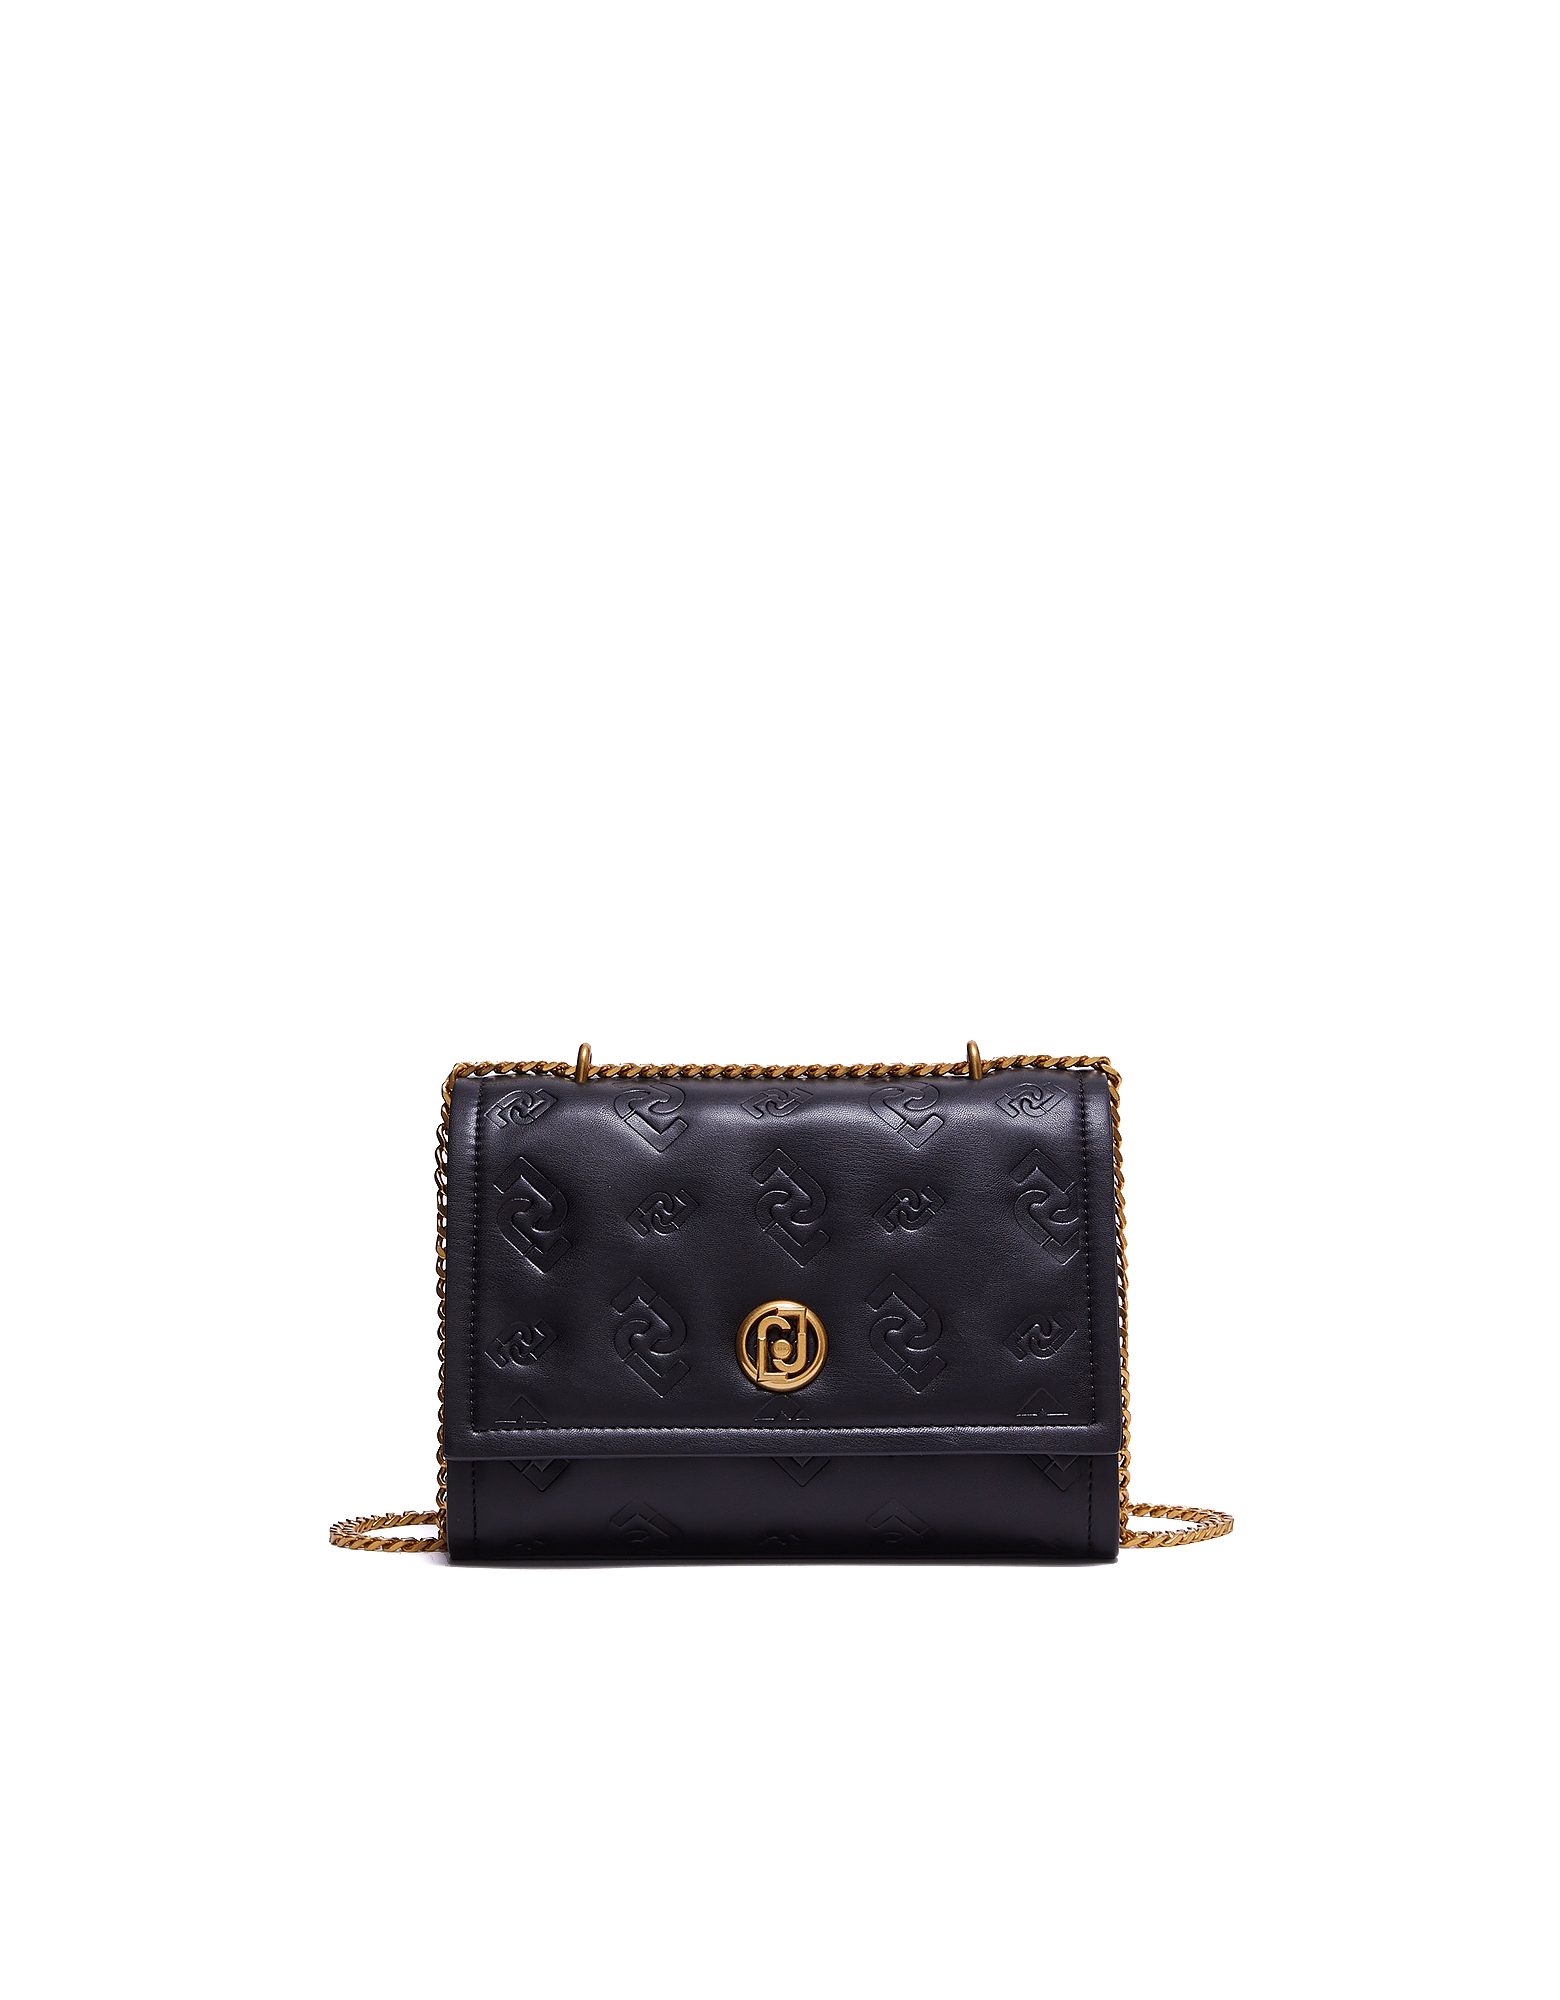 Liu •jo Designer Handbags Women's Bag In Black